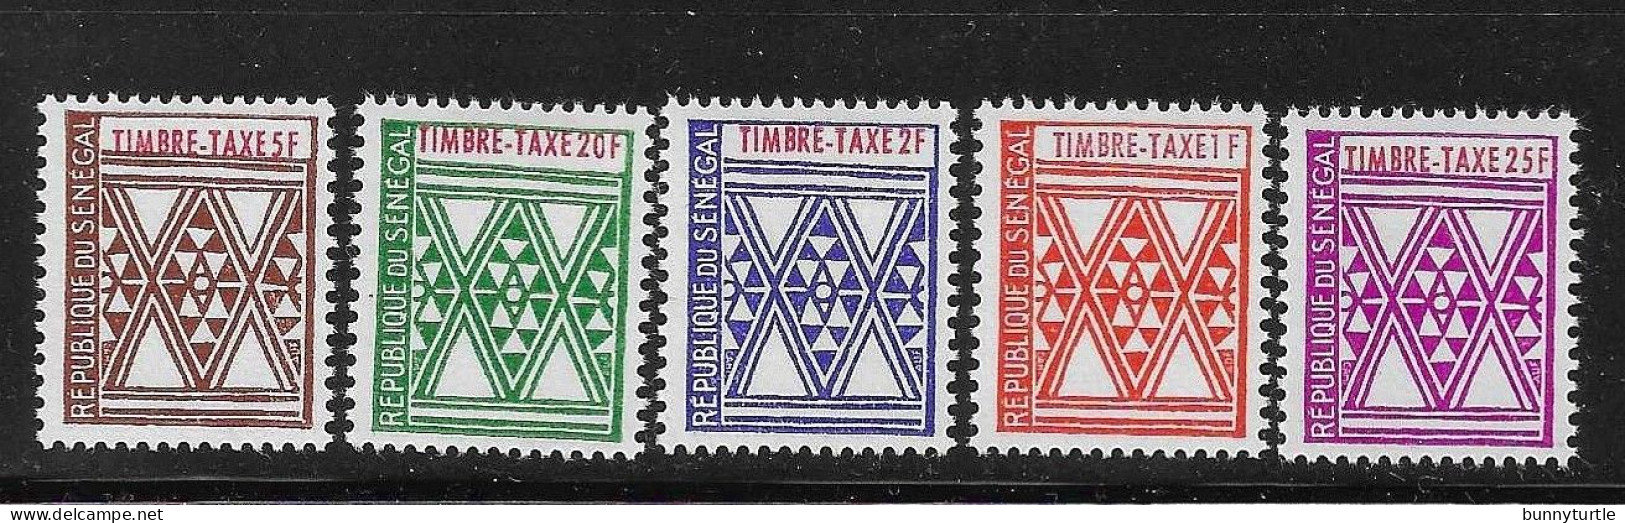 Senegal 1961 Postage Due Stamp MNH - Senegal (1960-...)